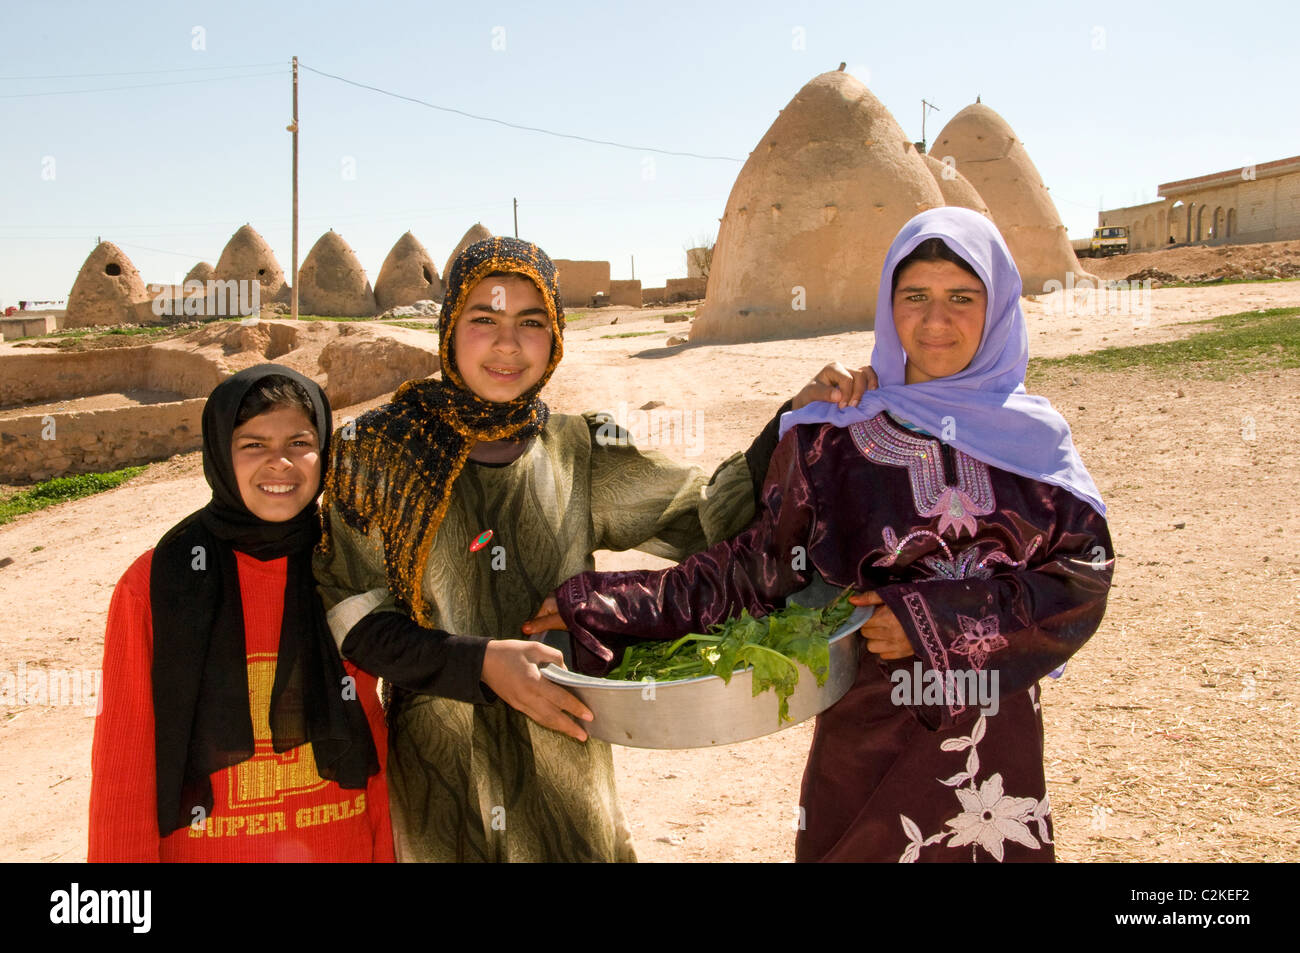 Syria desert Badiyat al Sham, farm sheep,culture, Bedouin Bedouins  Villages, man woman, Syrian  Middle East Stock Photo